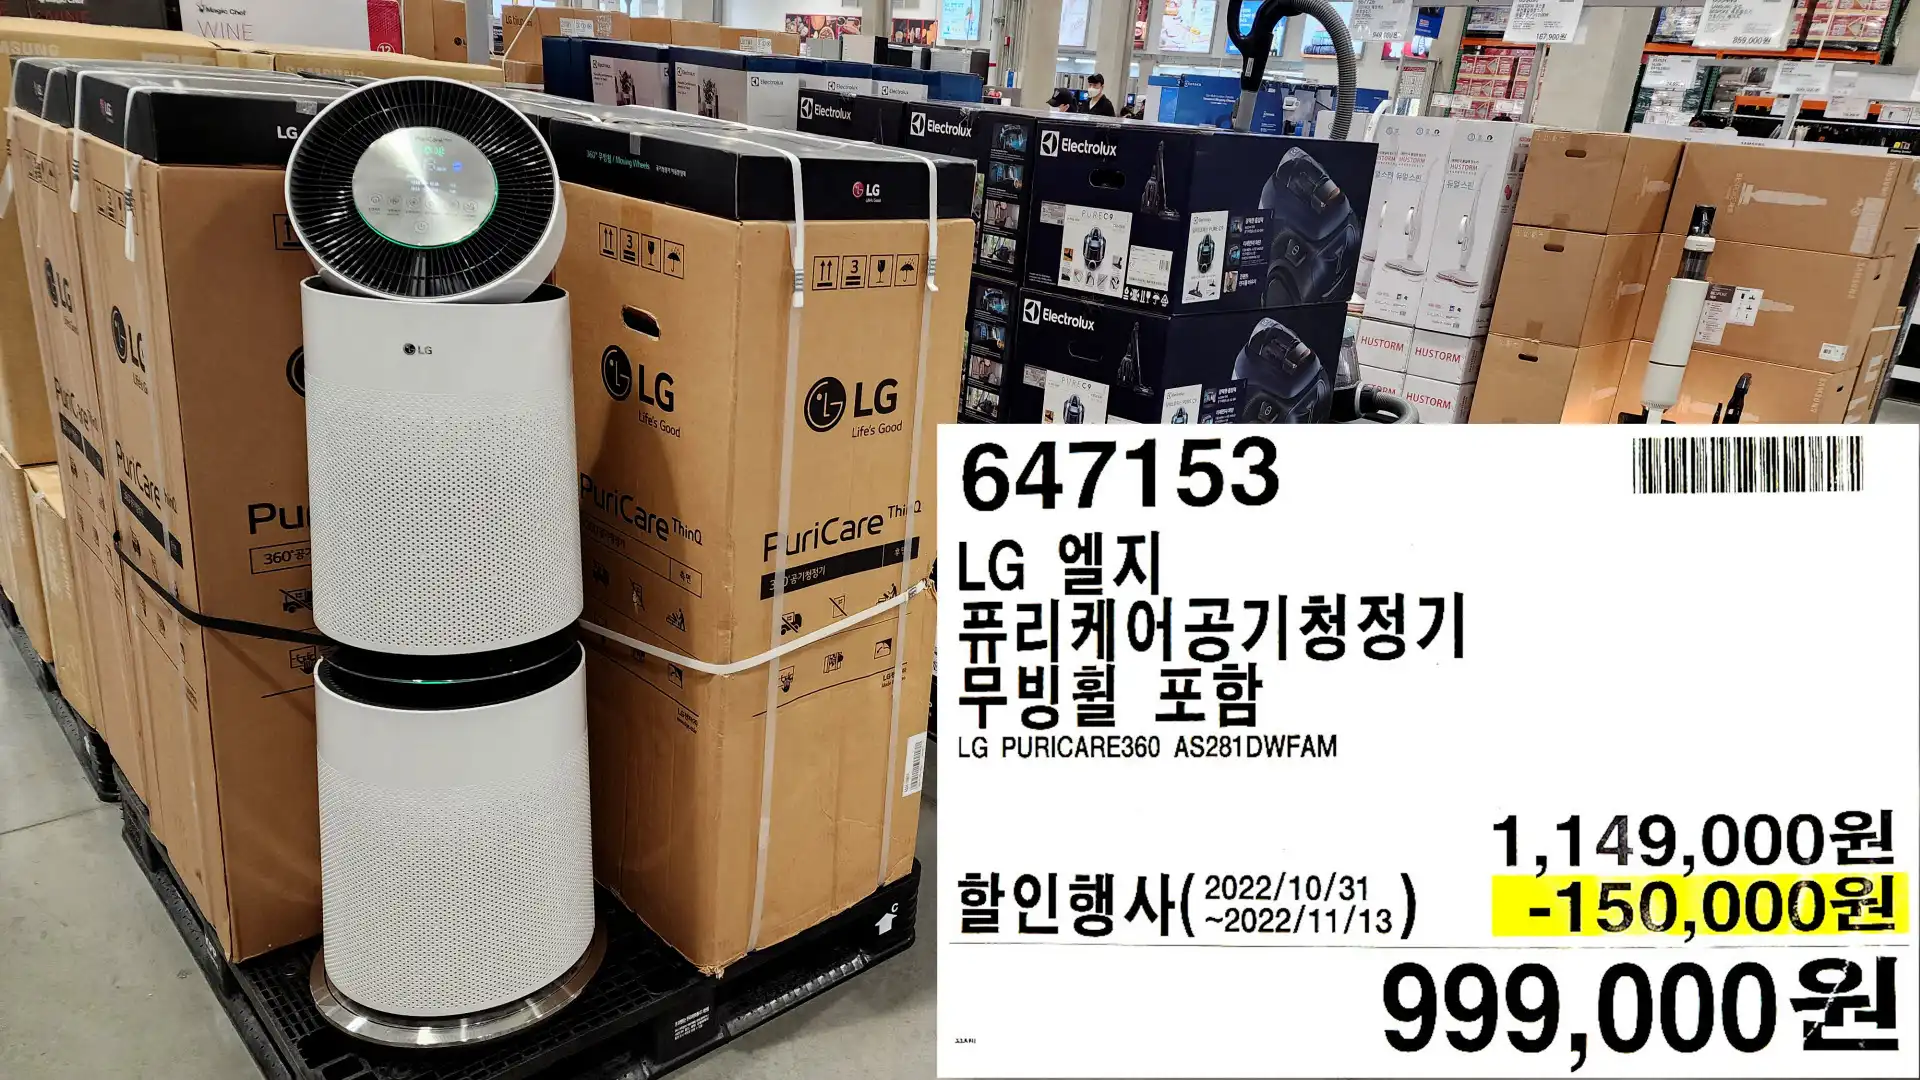 LG 엘지
퓨리케어 공기청정기
무빙휠 포함
LG PURICARE360 AS281DWFAM
999,000원